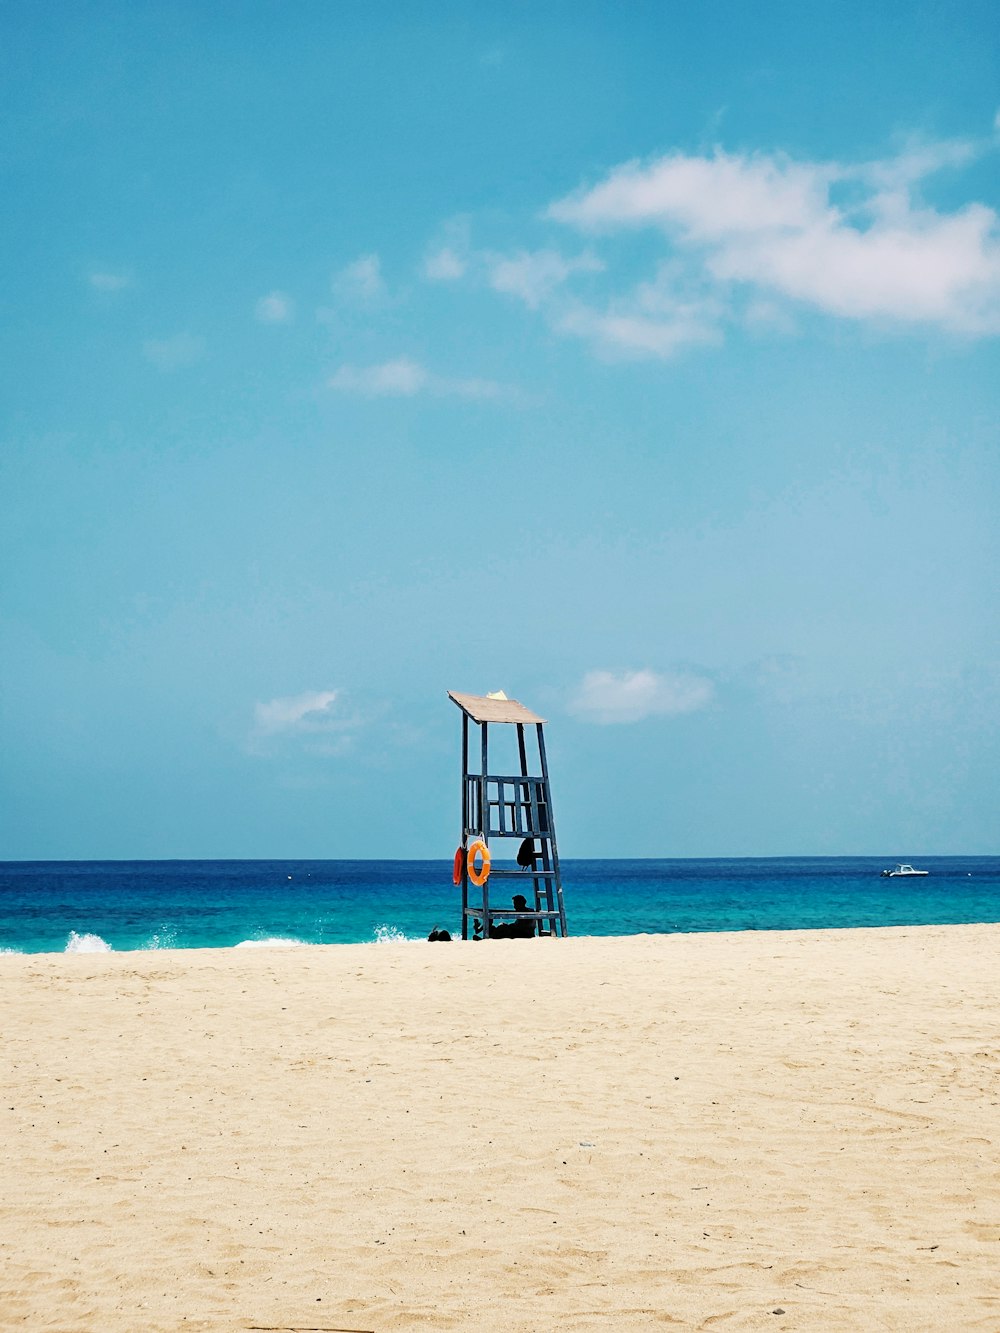 a lifeguard tower on a beach with a blue sky